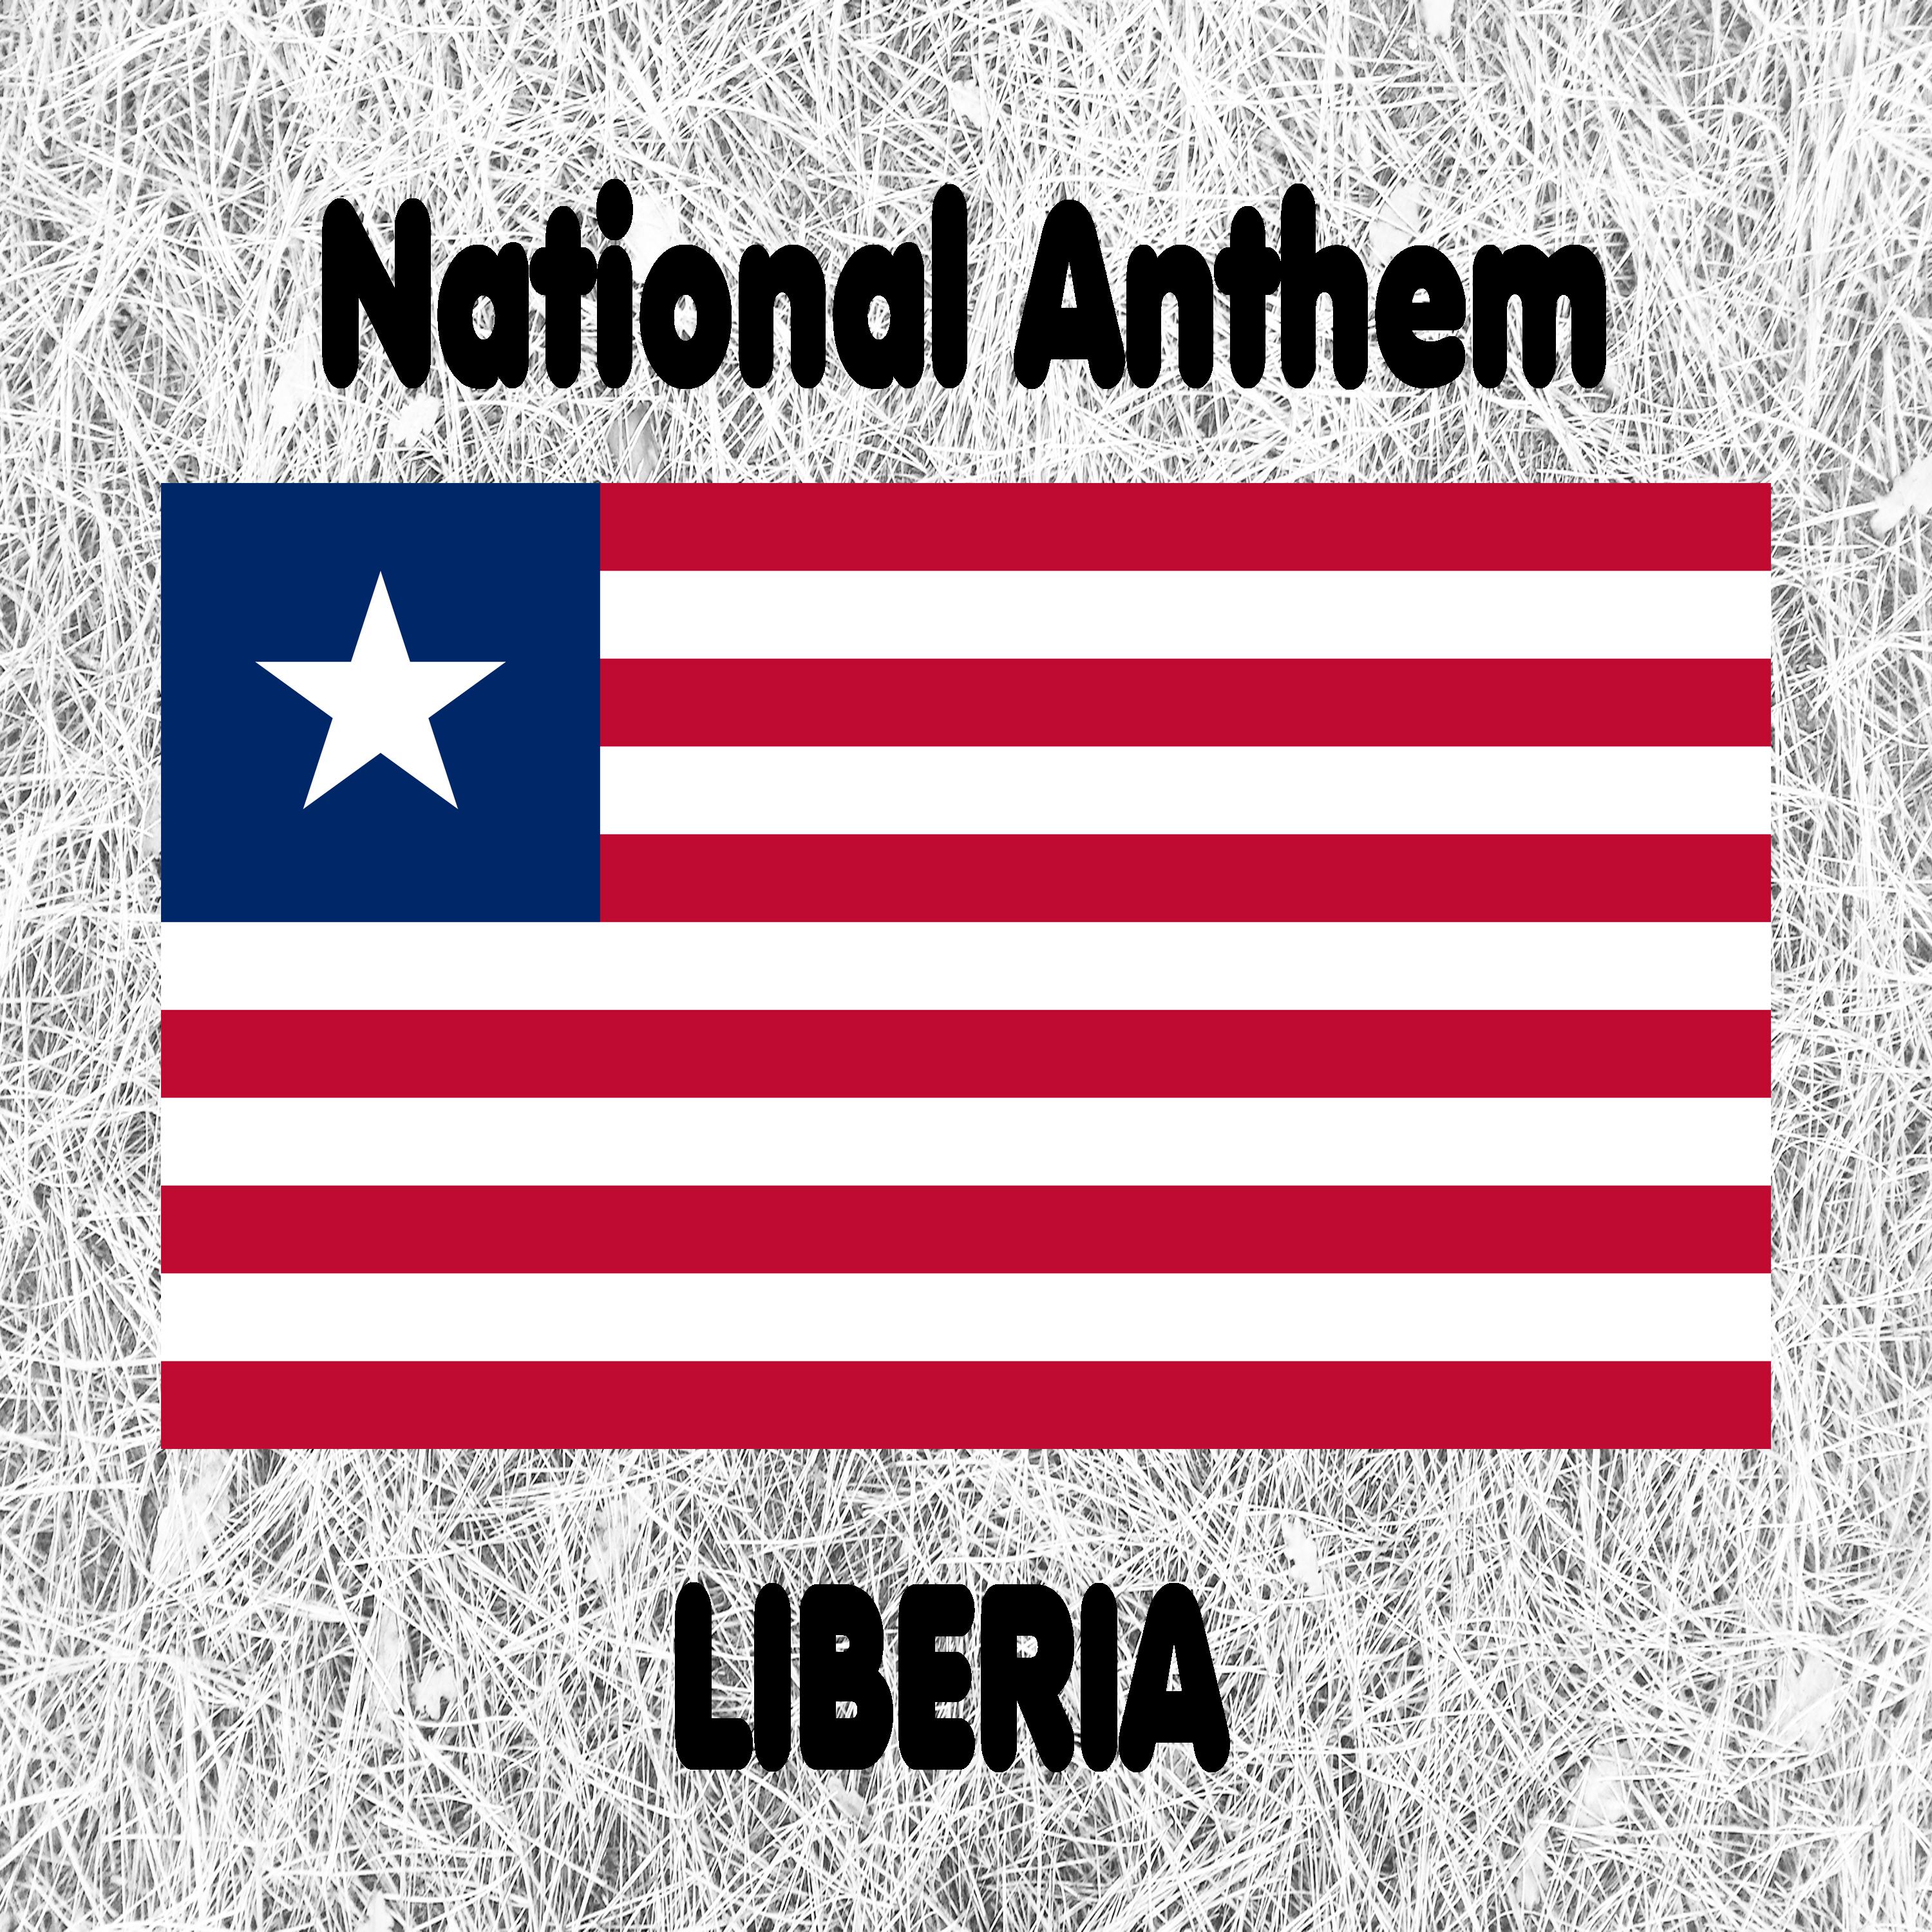 Liberia - All Hail, Liberia Hail! - Liberian National Anthem